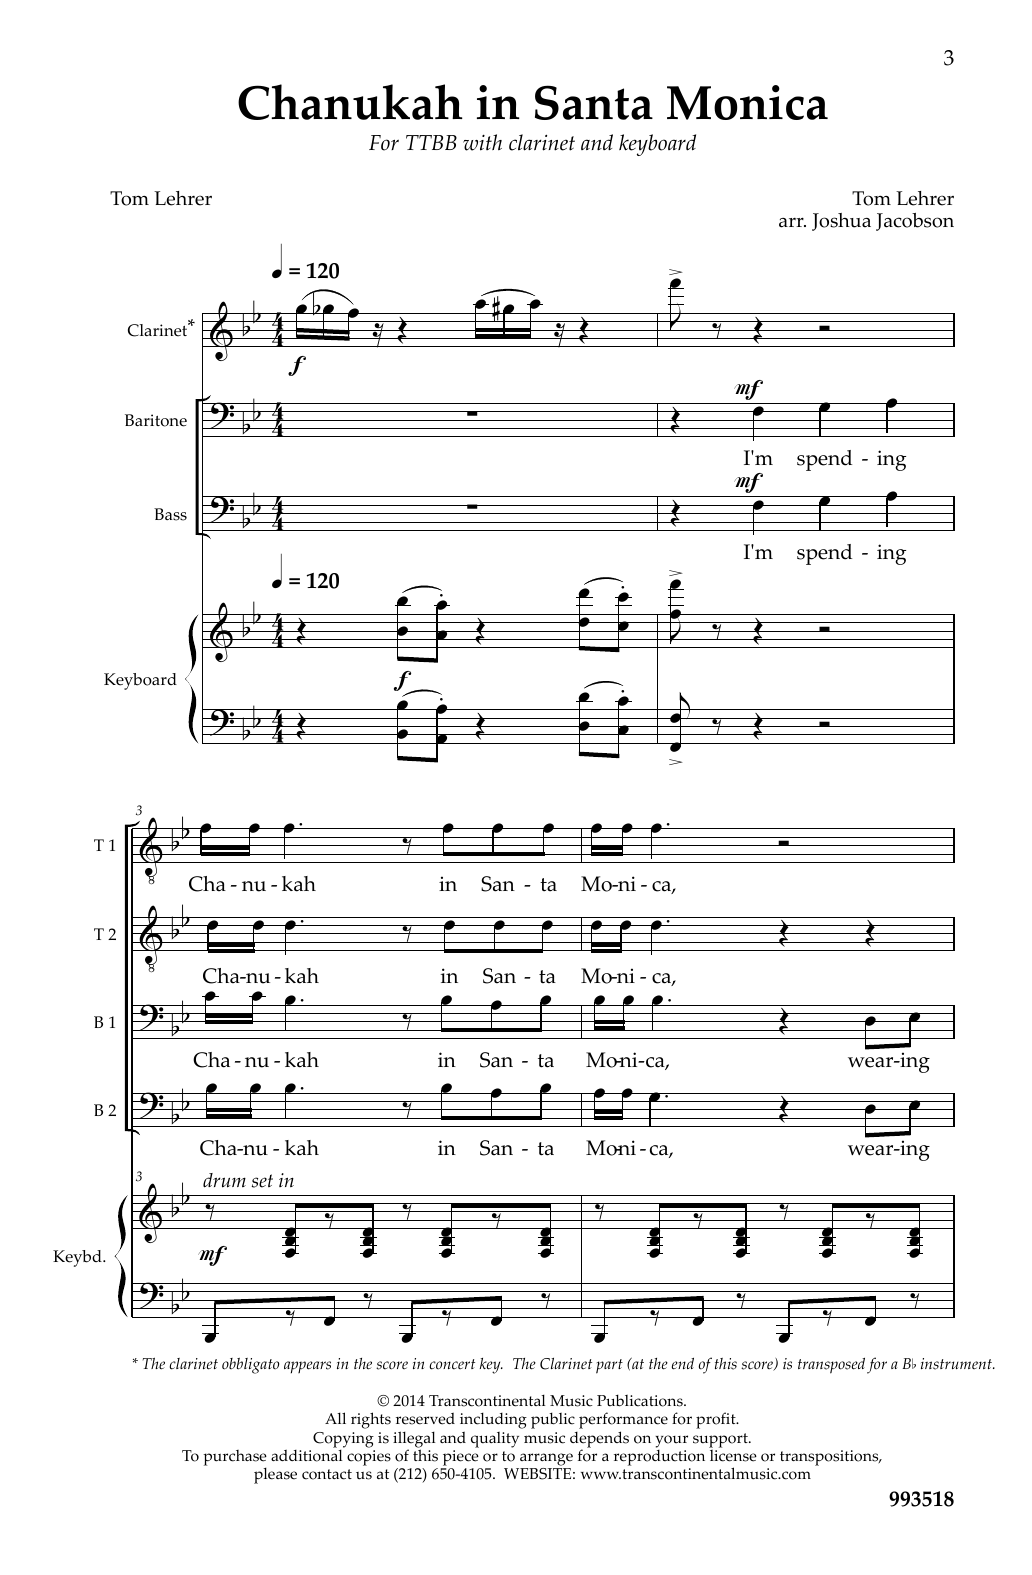 Tom Lehrer Chanukah in Santa Monica (arr. Joshua Jacobson) Sheet Music Notes & Chords for TTBB Choir - Download or Print PDF